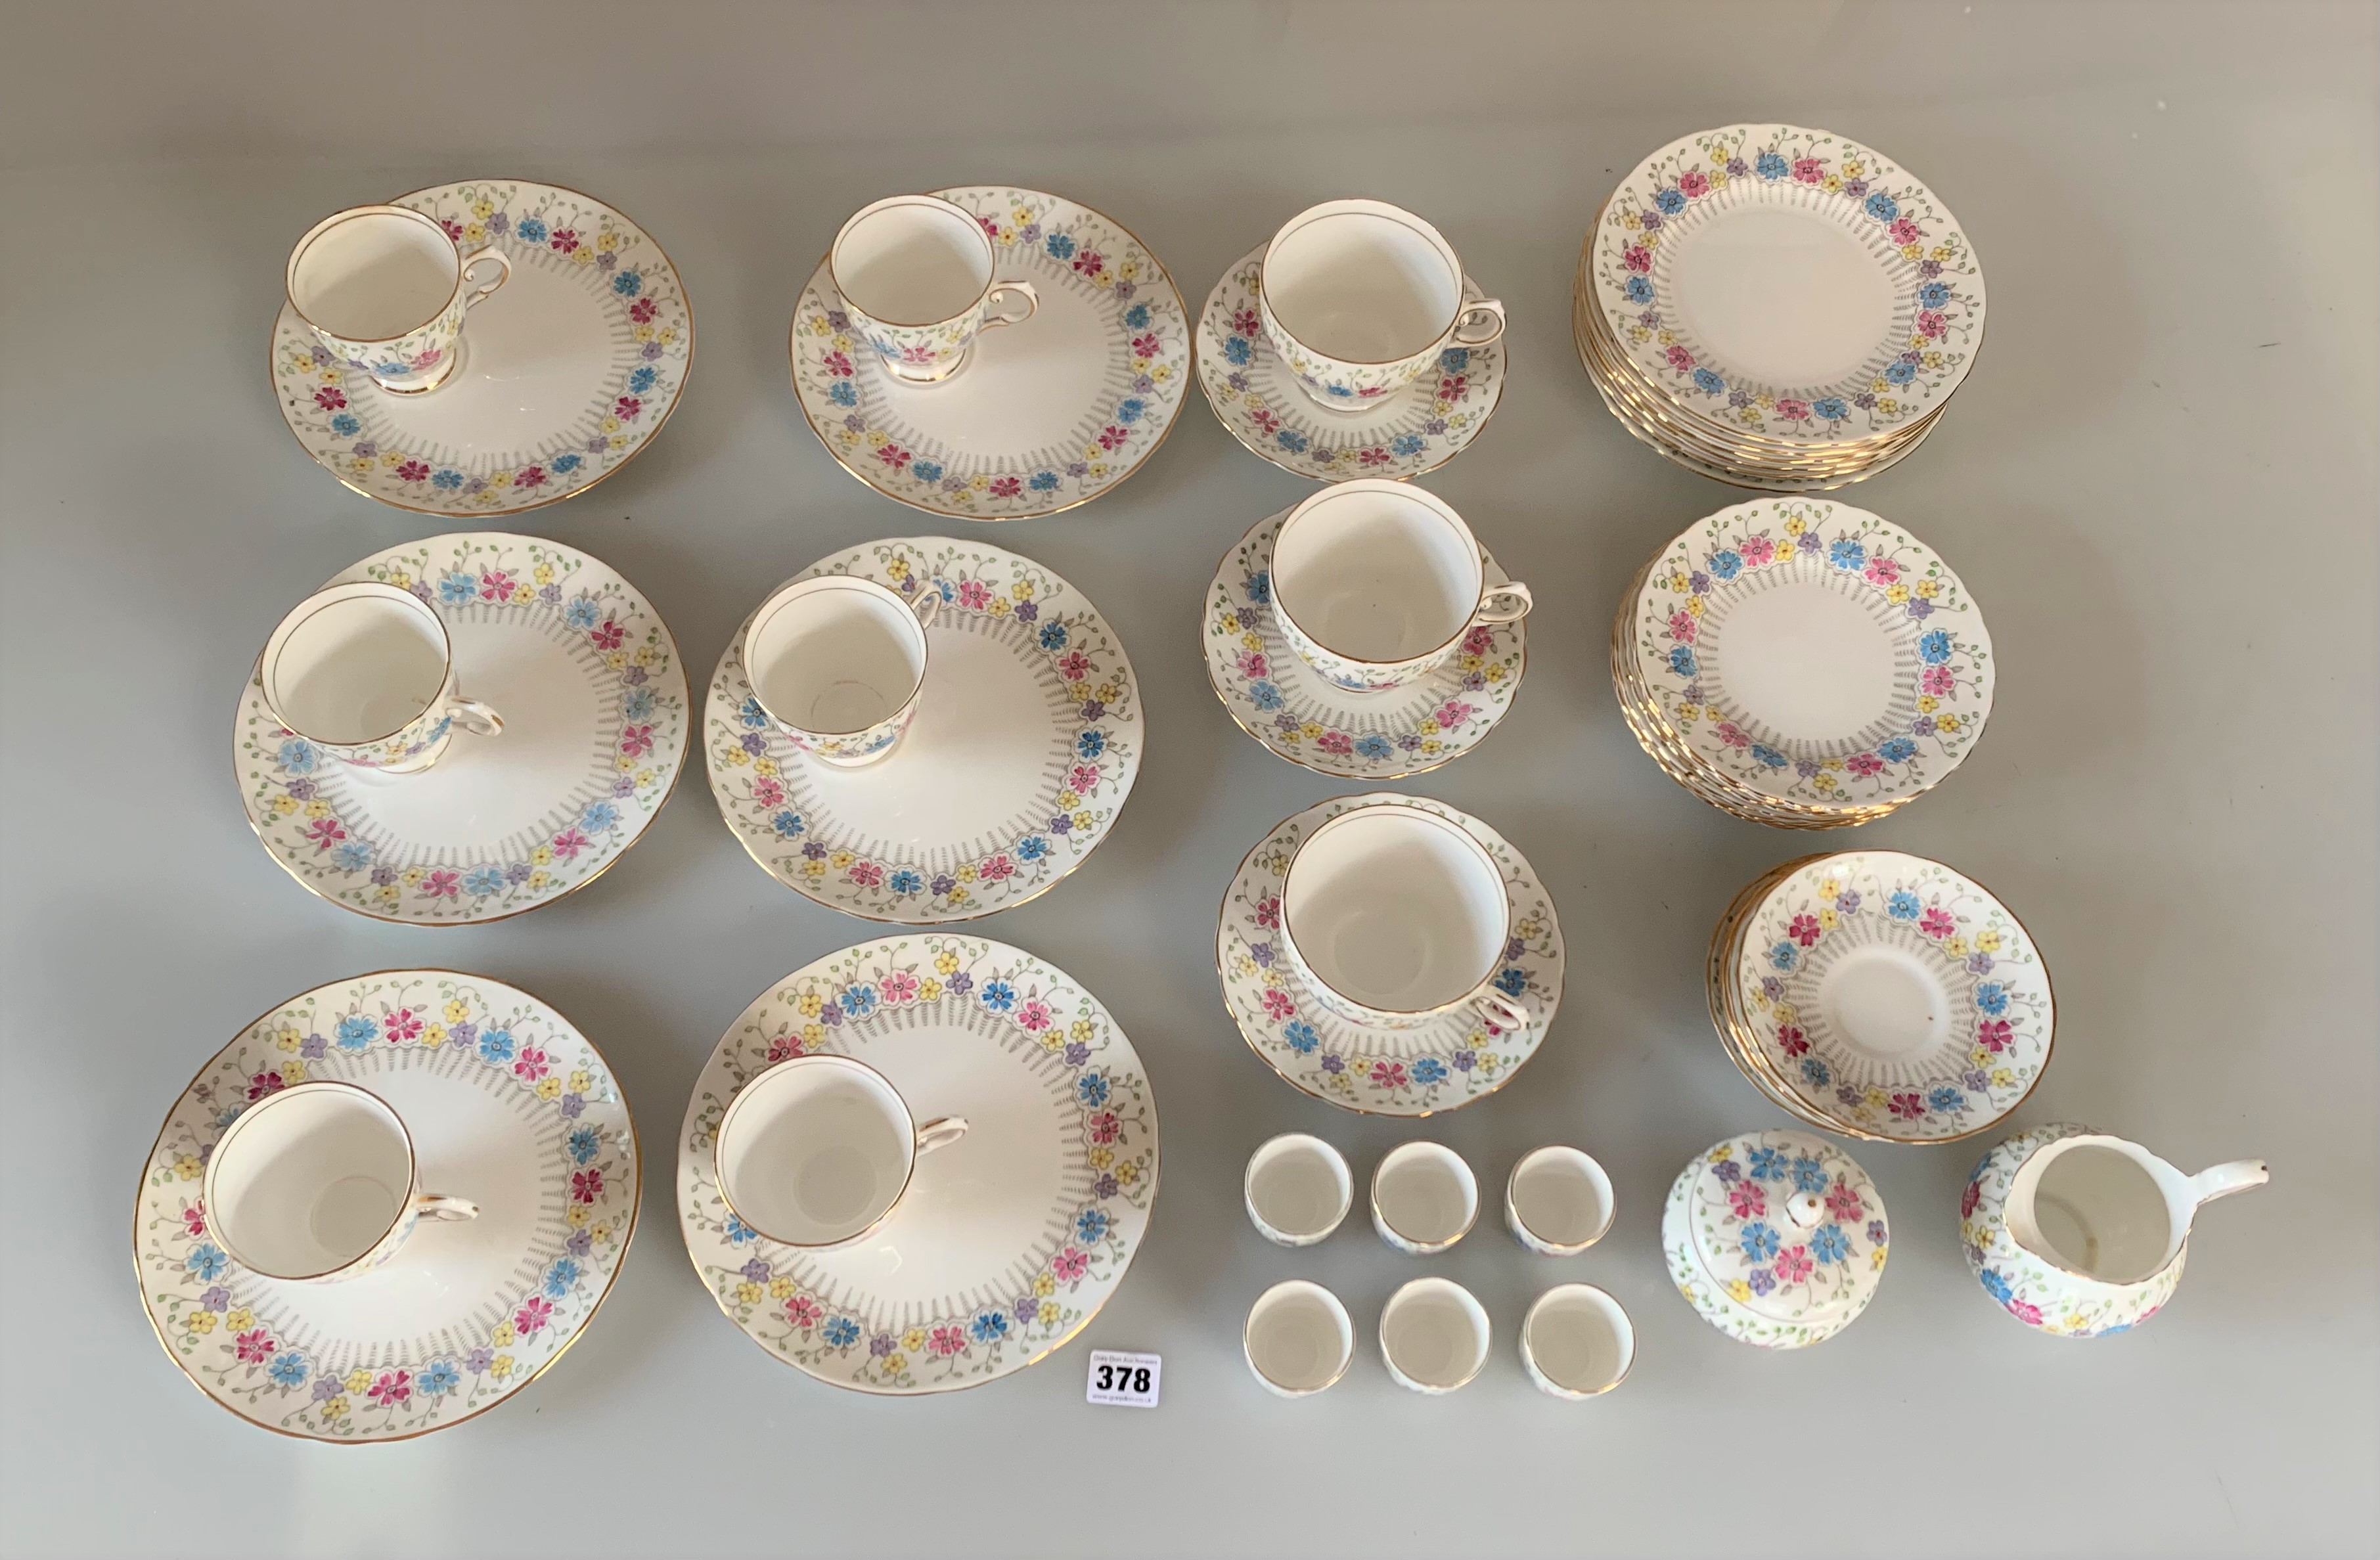 44 piece part Tuscan china tea service comprising 6 cups, 6 saucers, 3 large cups, 3 large